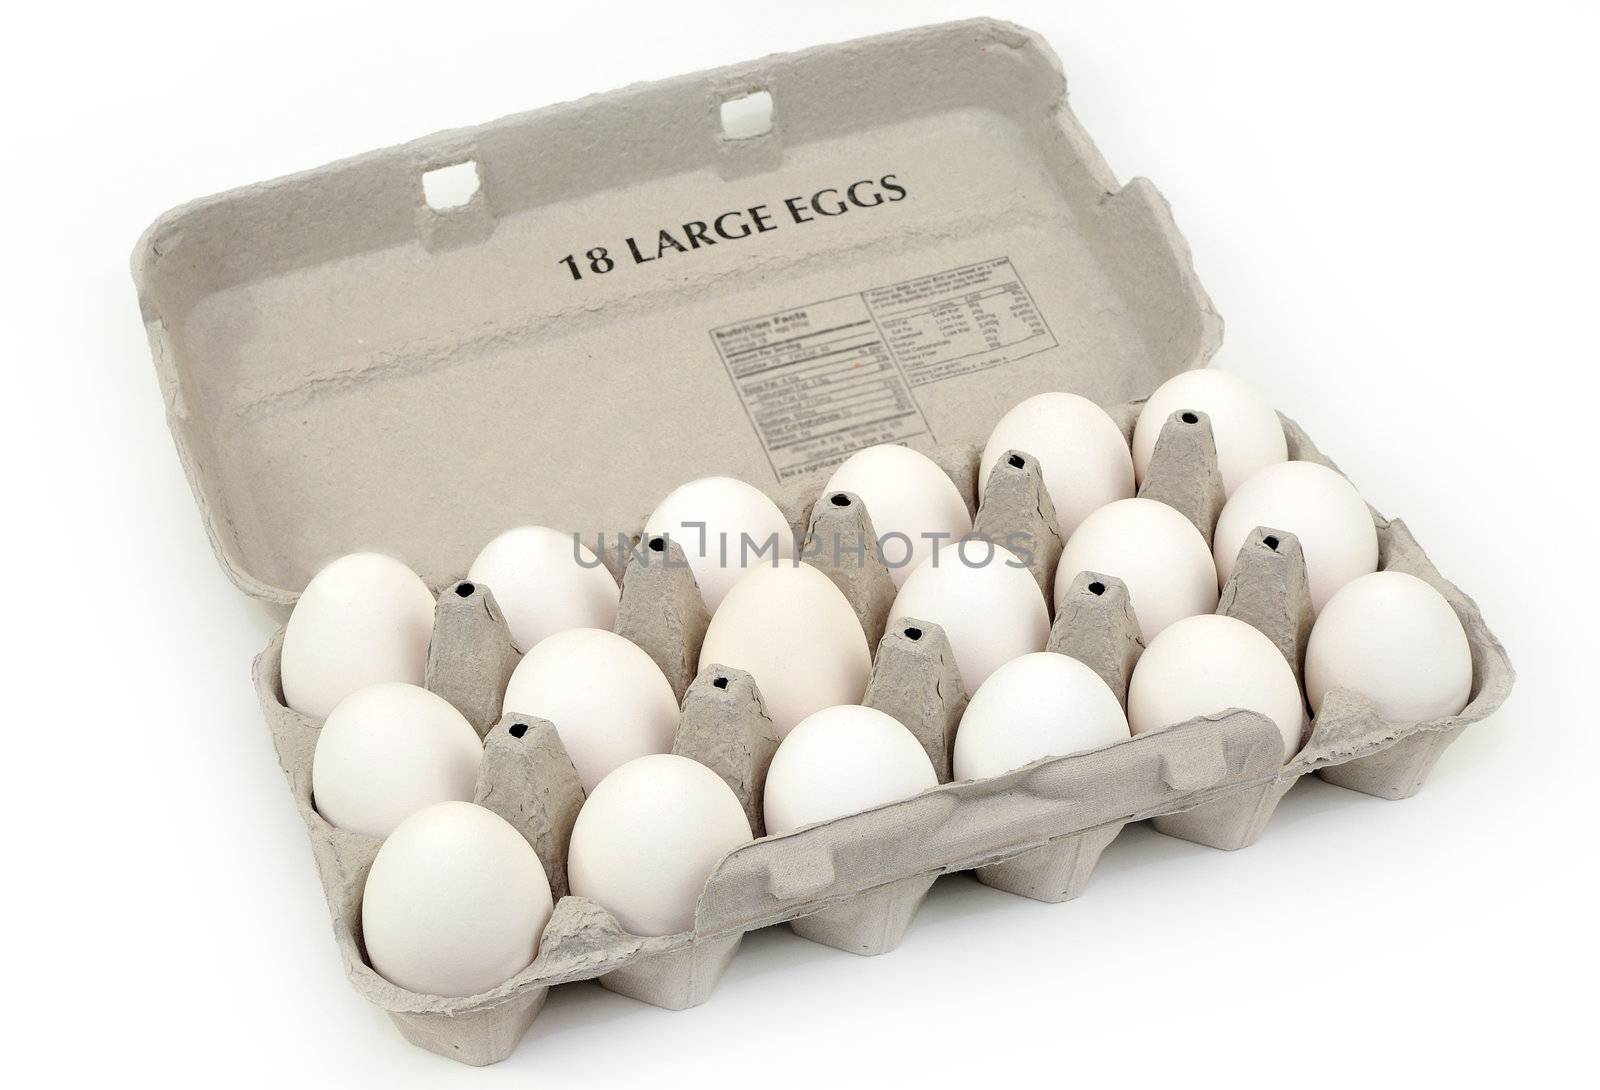 Eggs carton by neelsky